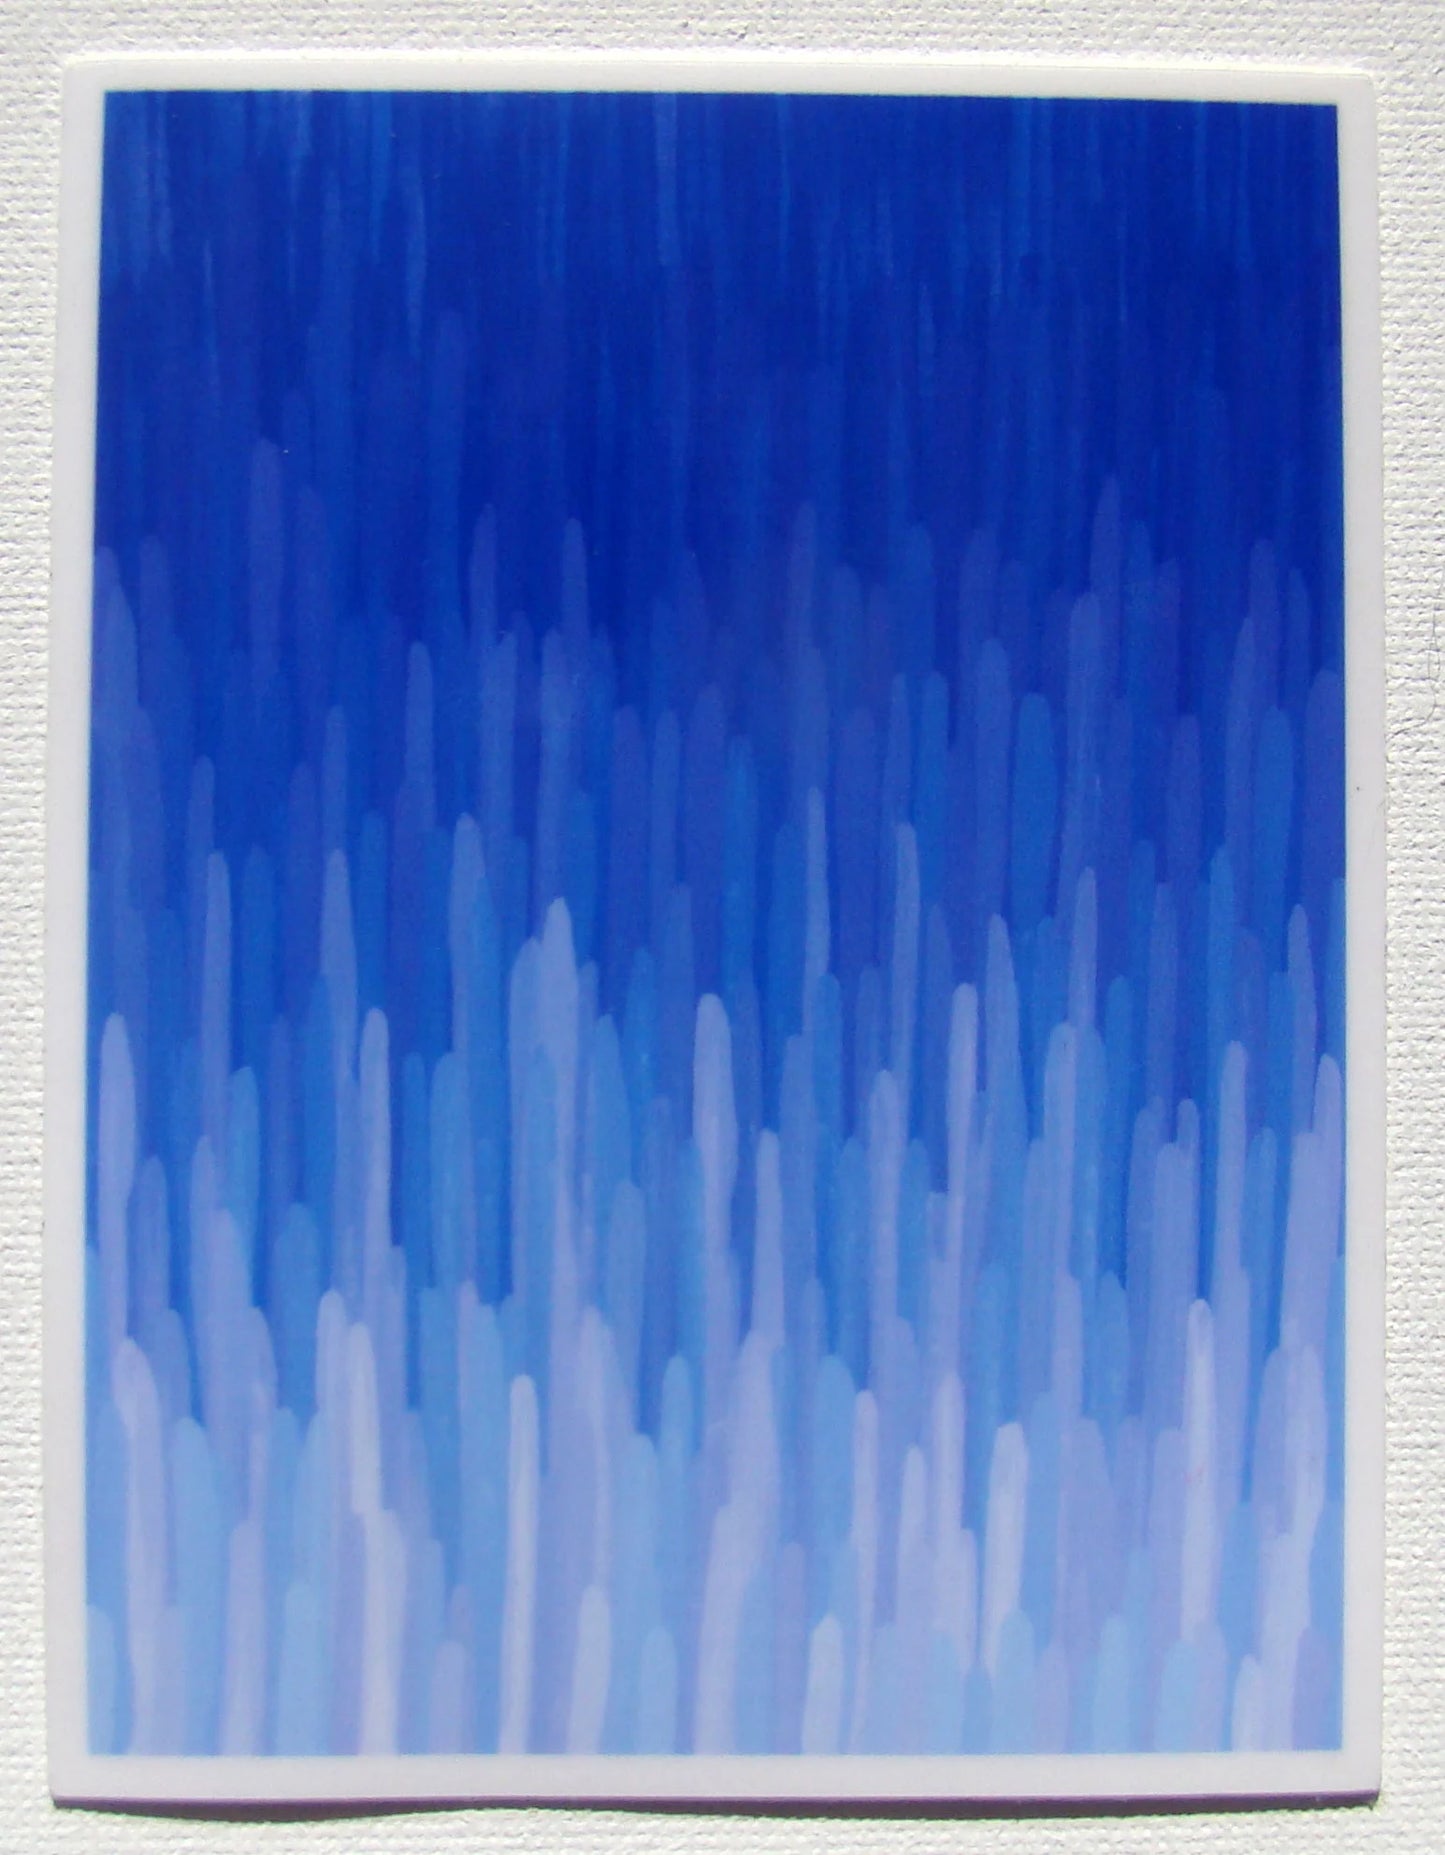 Lapis Lazuli Sticker